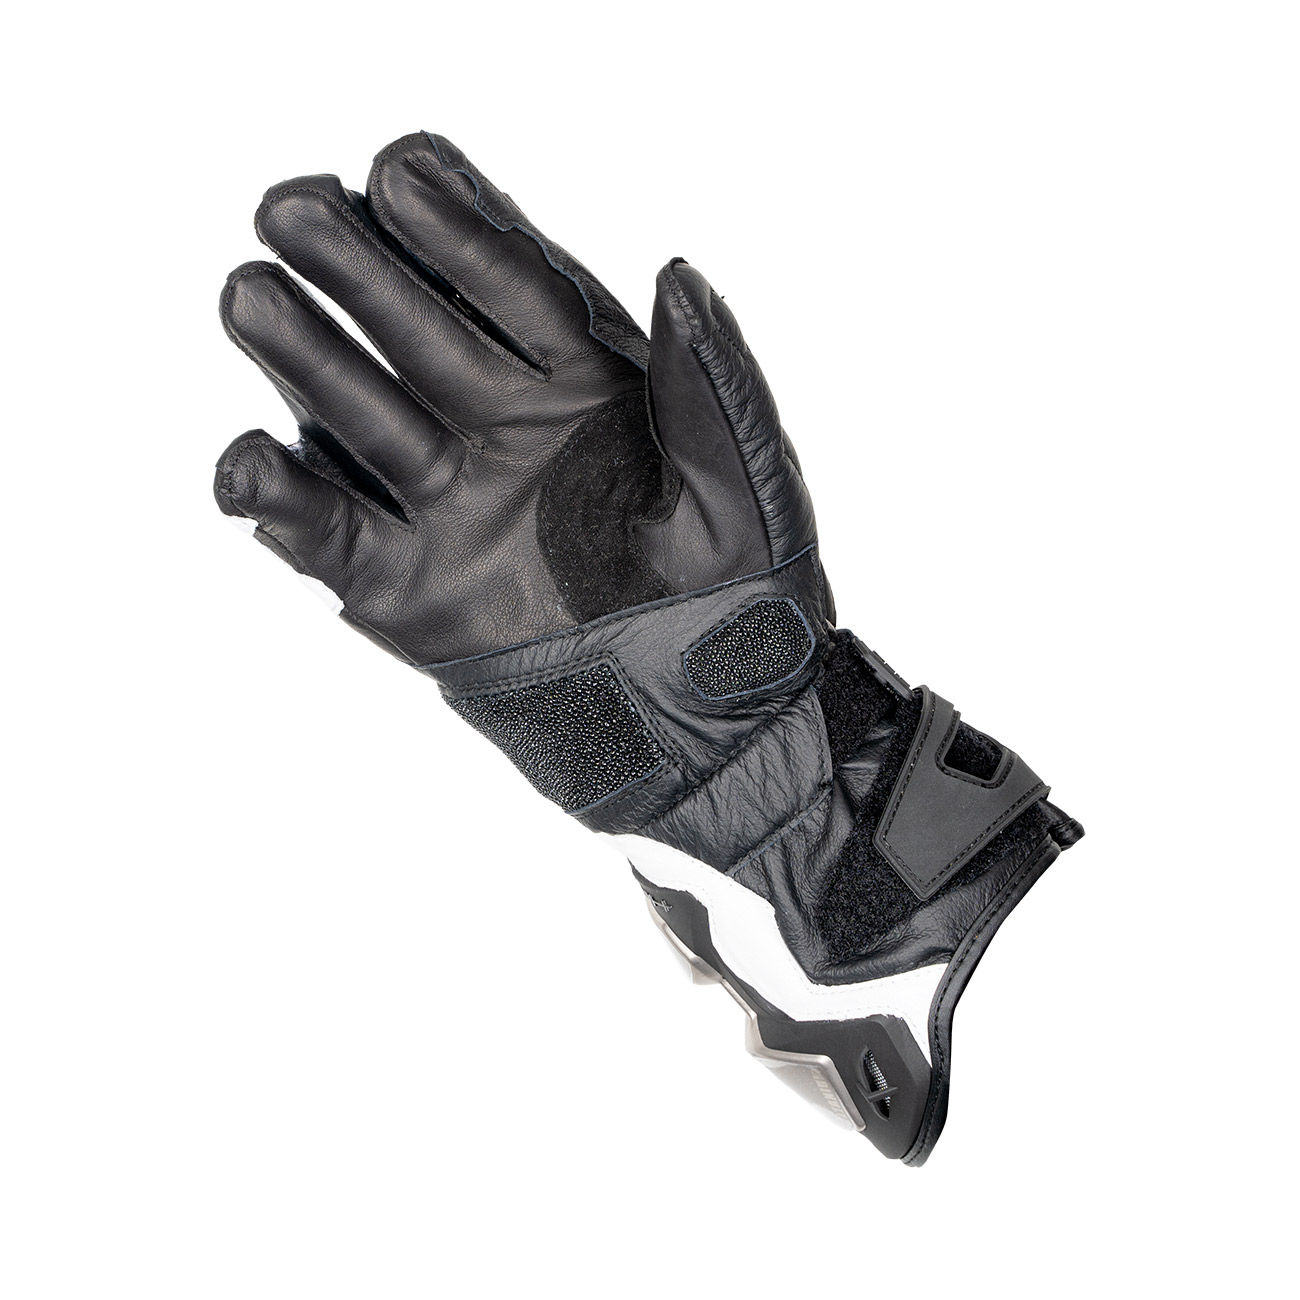 Titan XR 2 Sport gloves